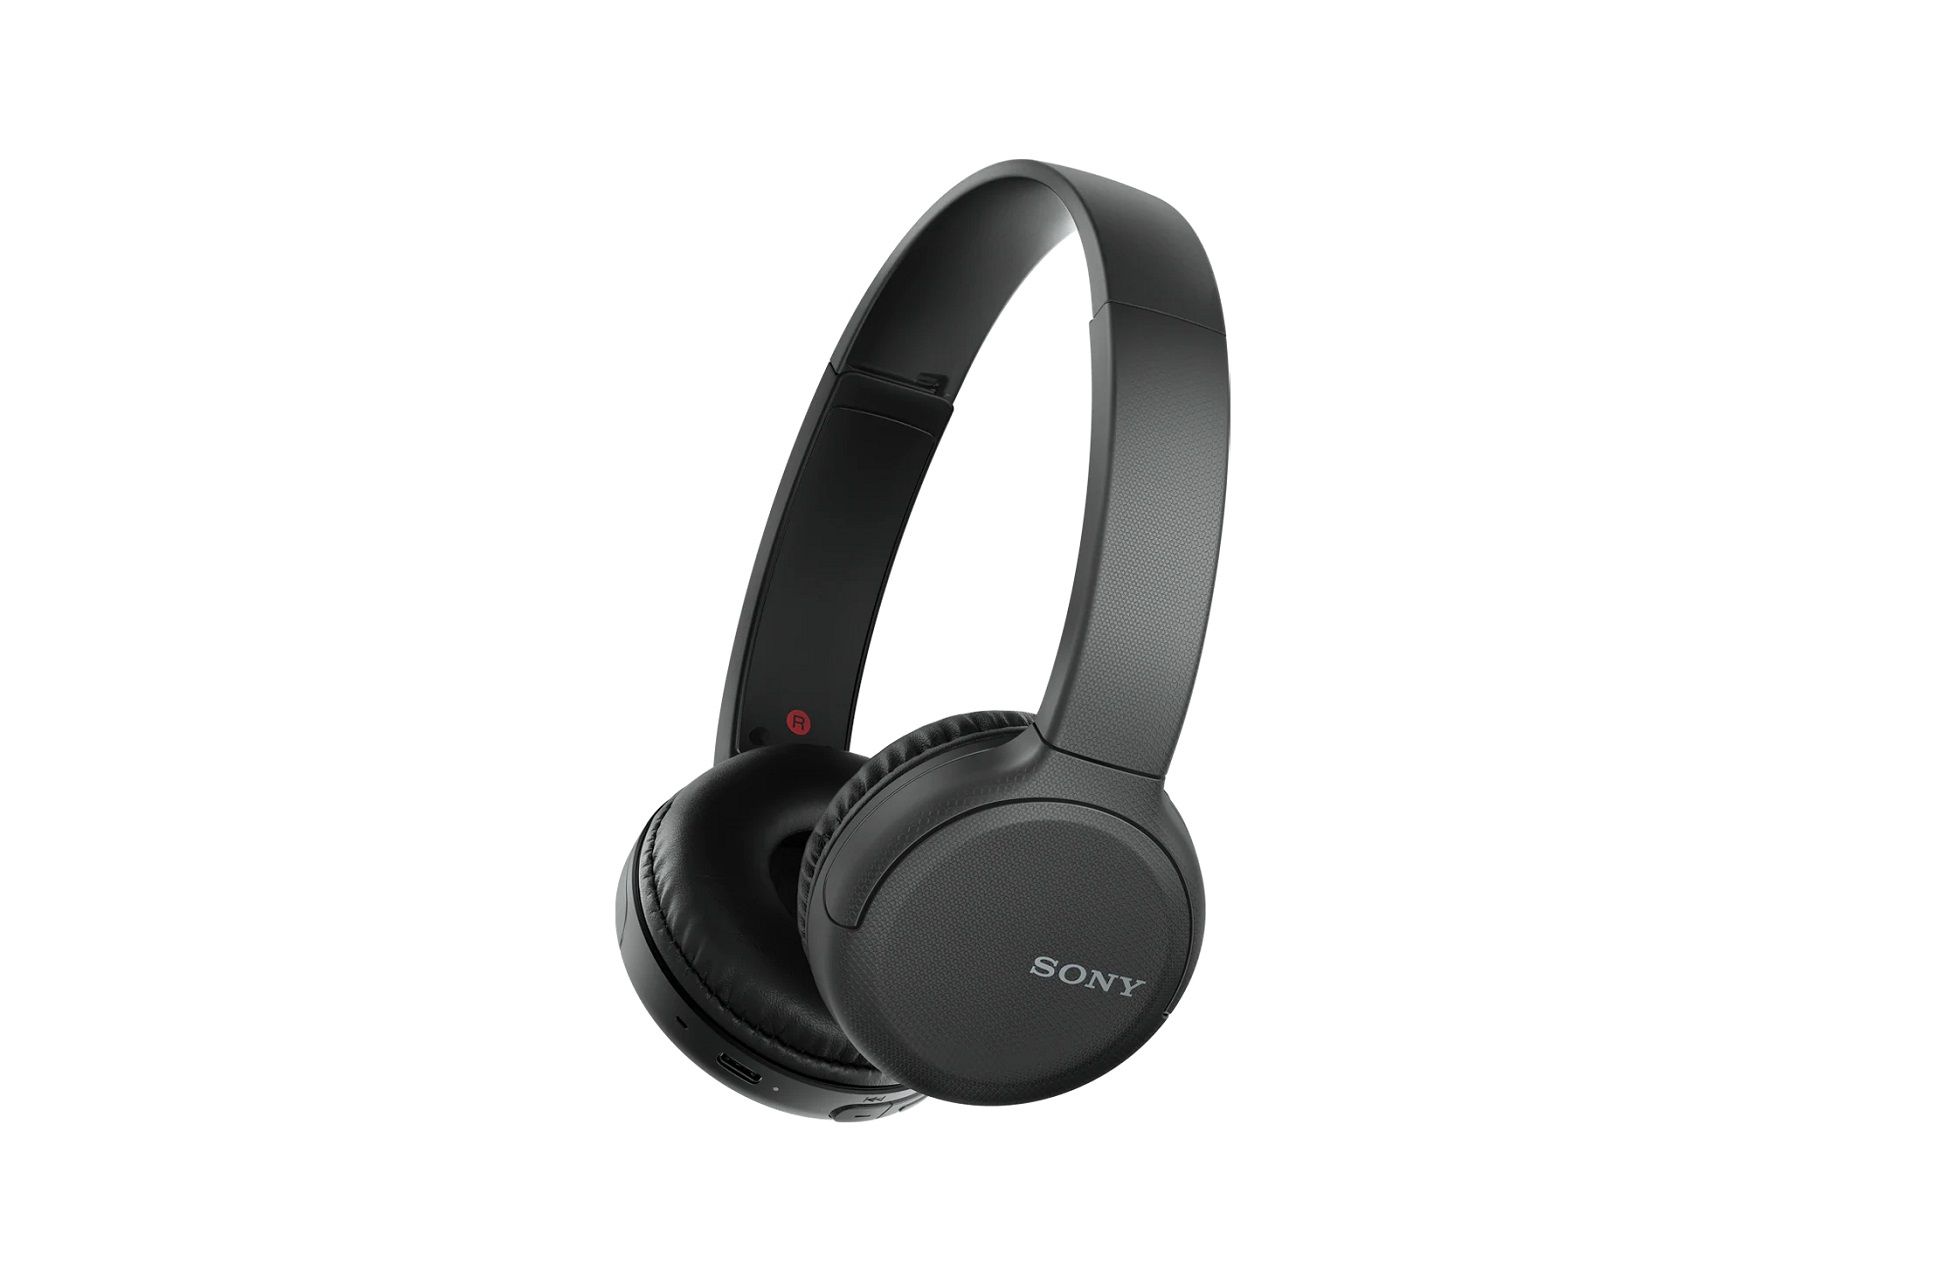  Sony WH-CH510 (Black) On Ear Closed Back Mic Wireless Bluetooth Headphones